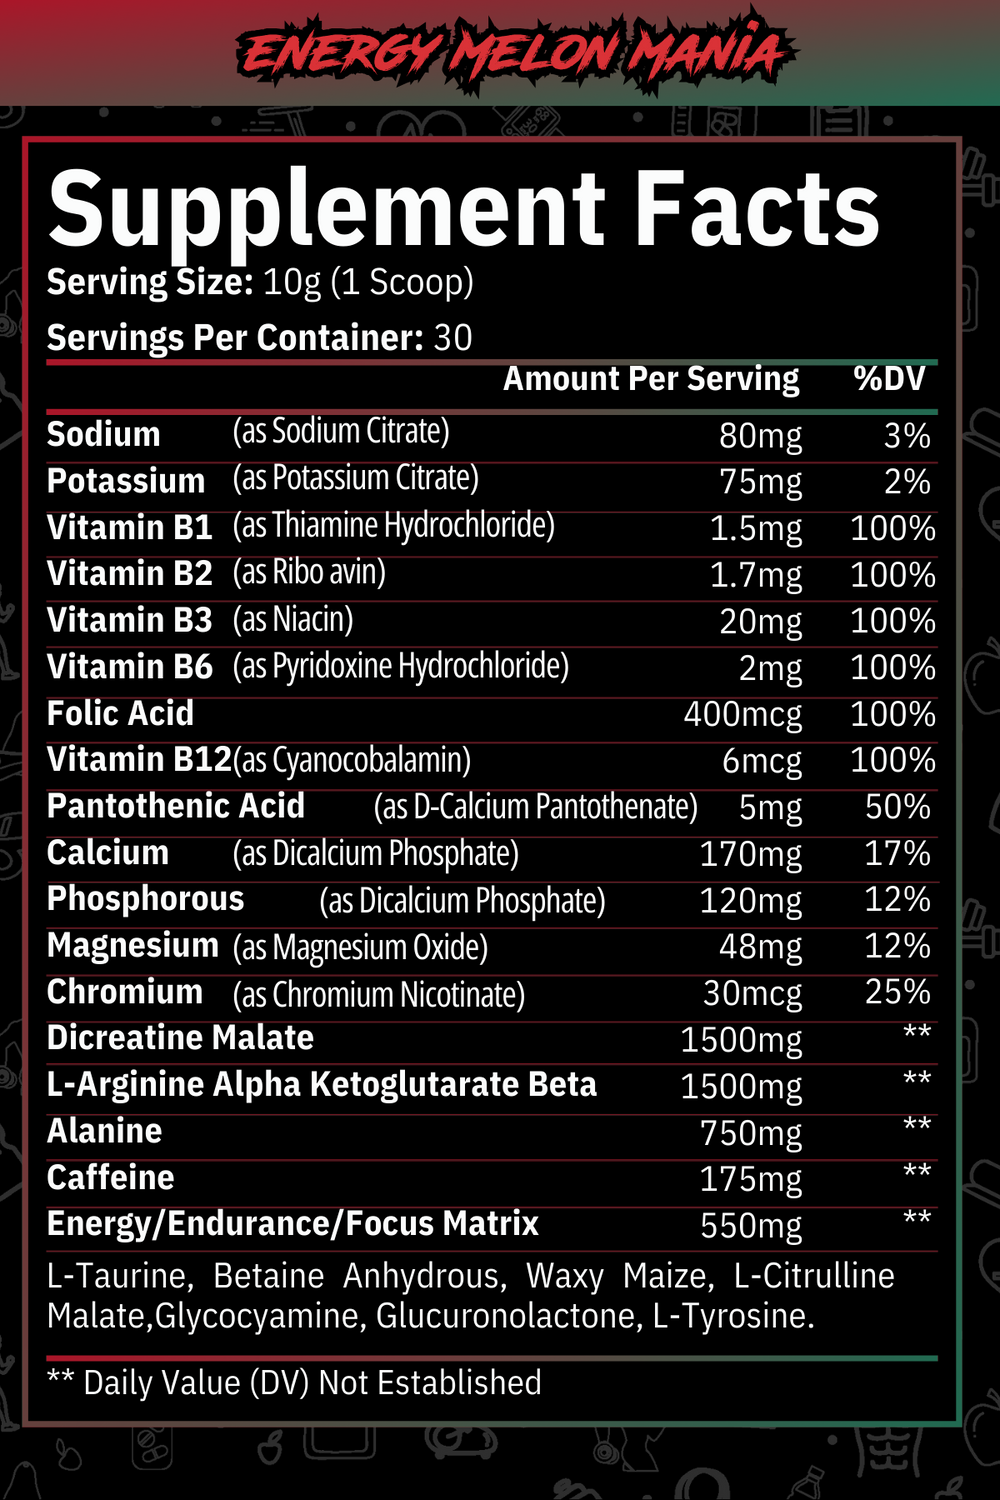 Dose Fuel Energy Melon Mania Supplement Facts - 10g Serving Size, 175mg Caffeine, Vitamins B1, B2, B3, B6, B12, Amino Acids, and Energy/Endurance/Focus Matrix